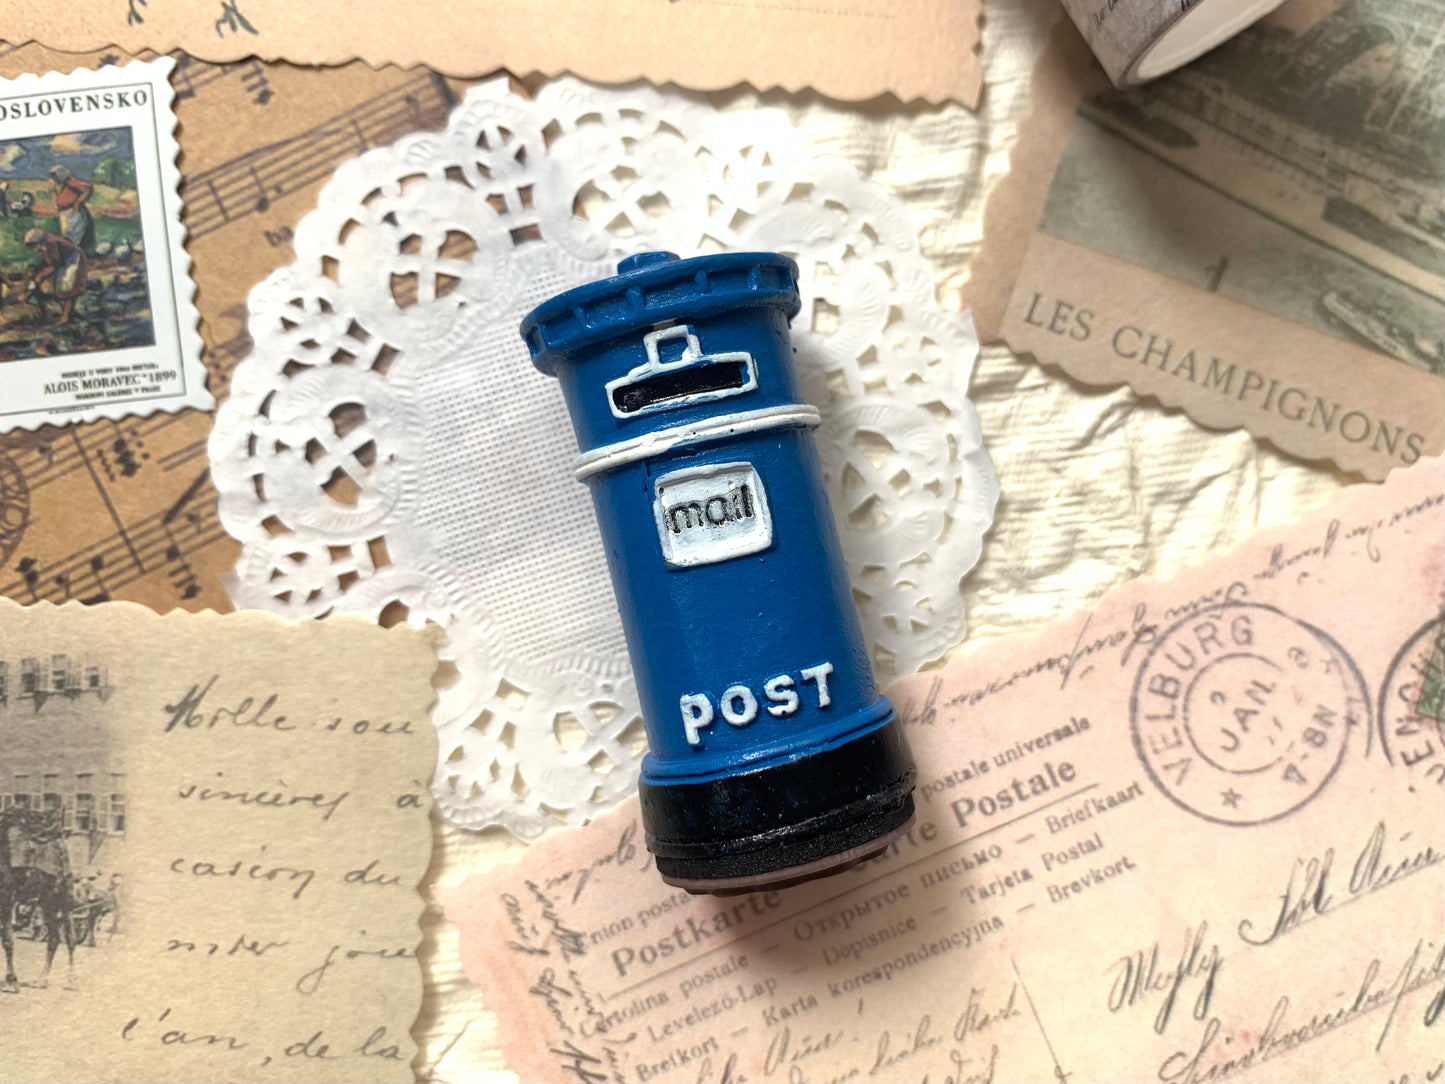 Mail Box Stamp - Blue